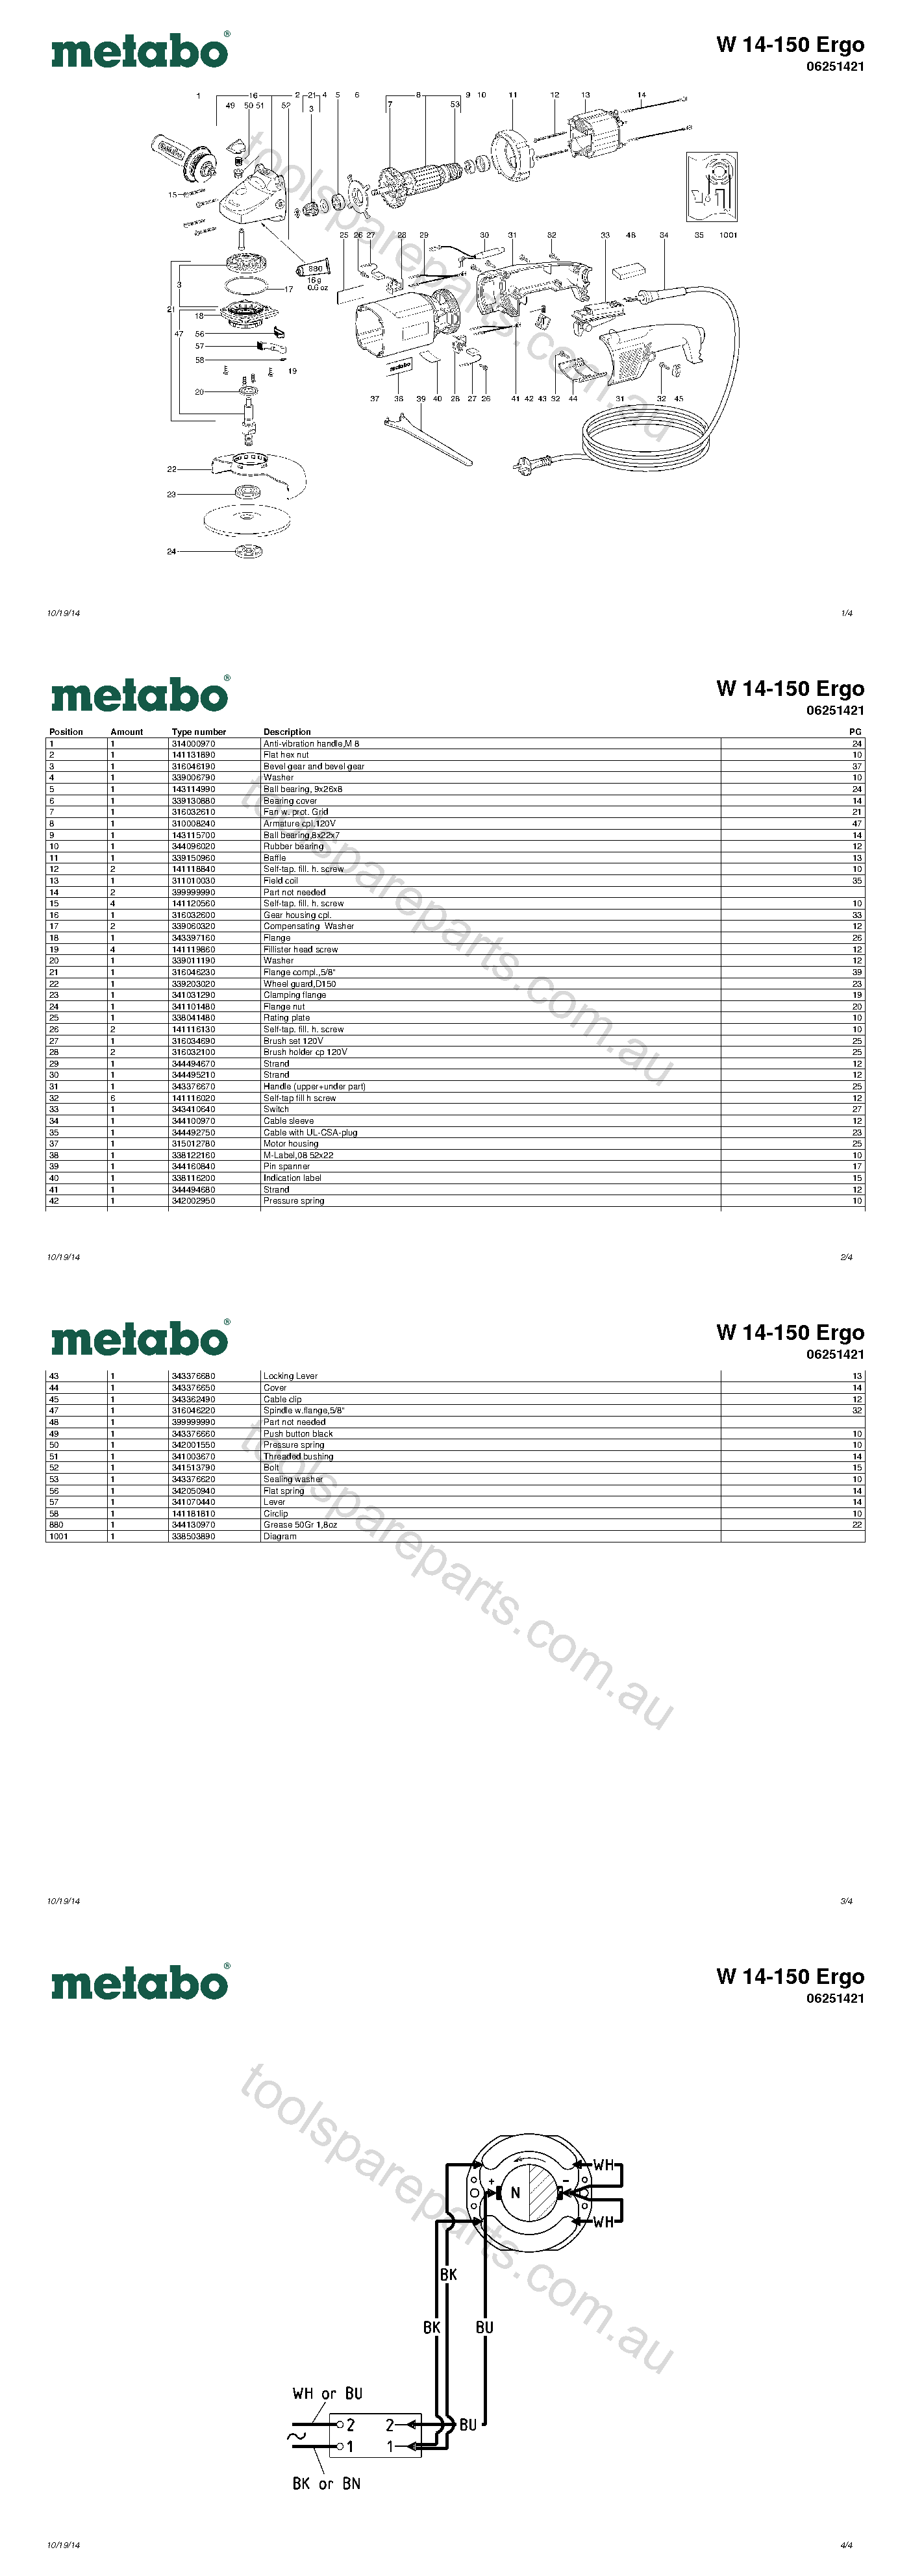 Metabo W 14-150 Ergo 06251421  Diagram 1